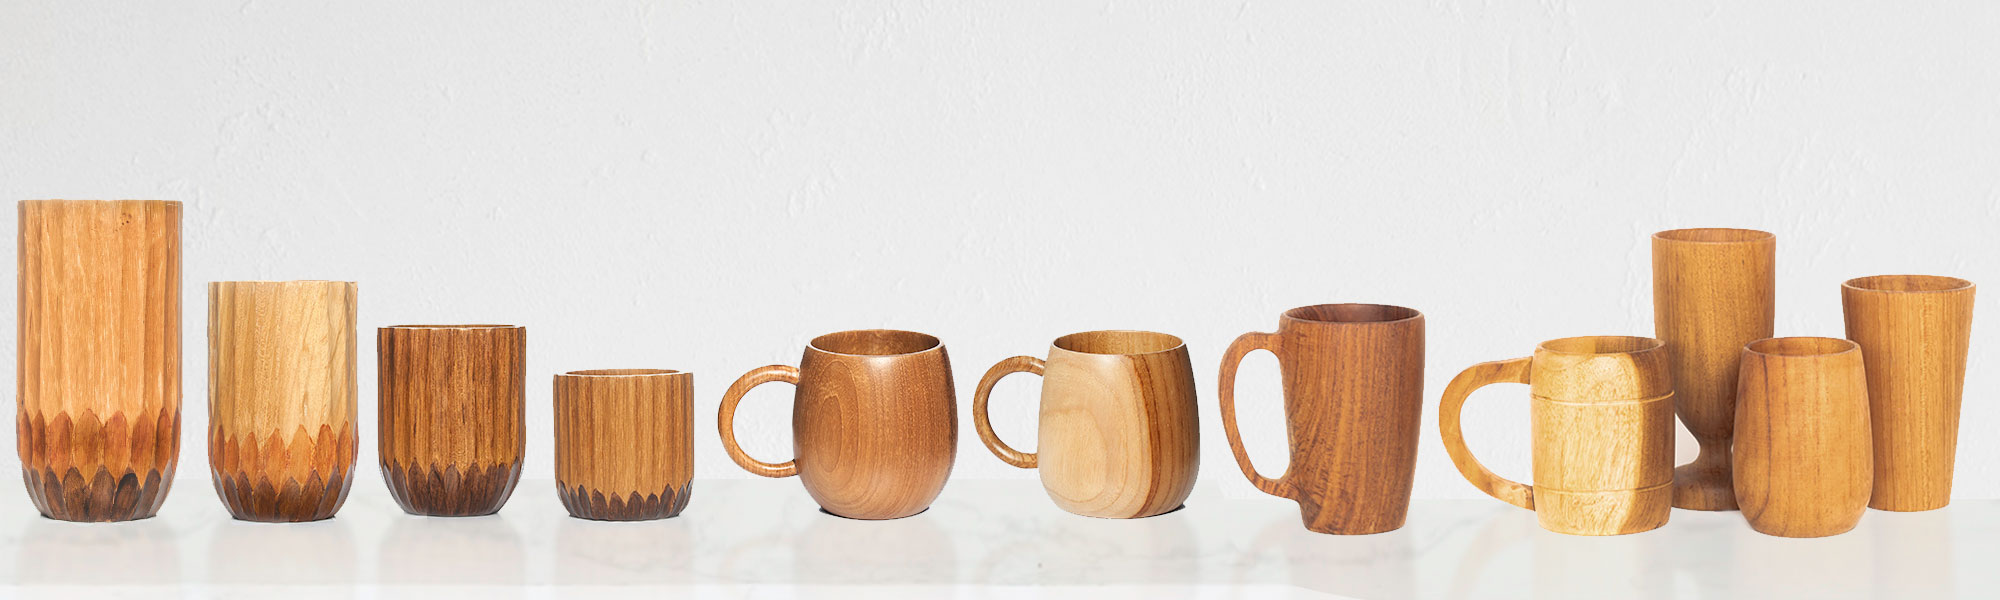  Cups & Mugs